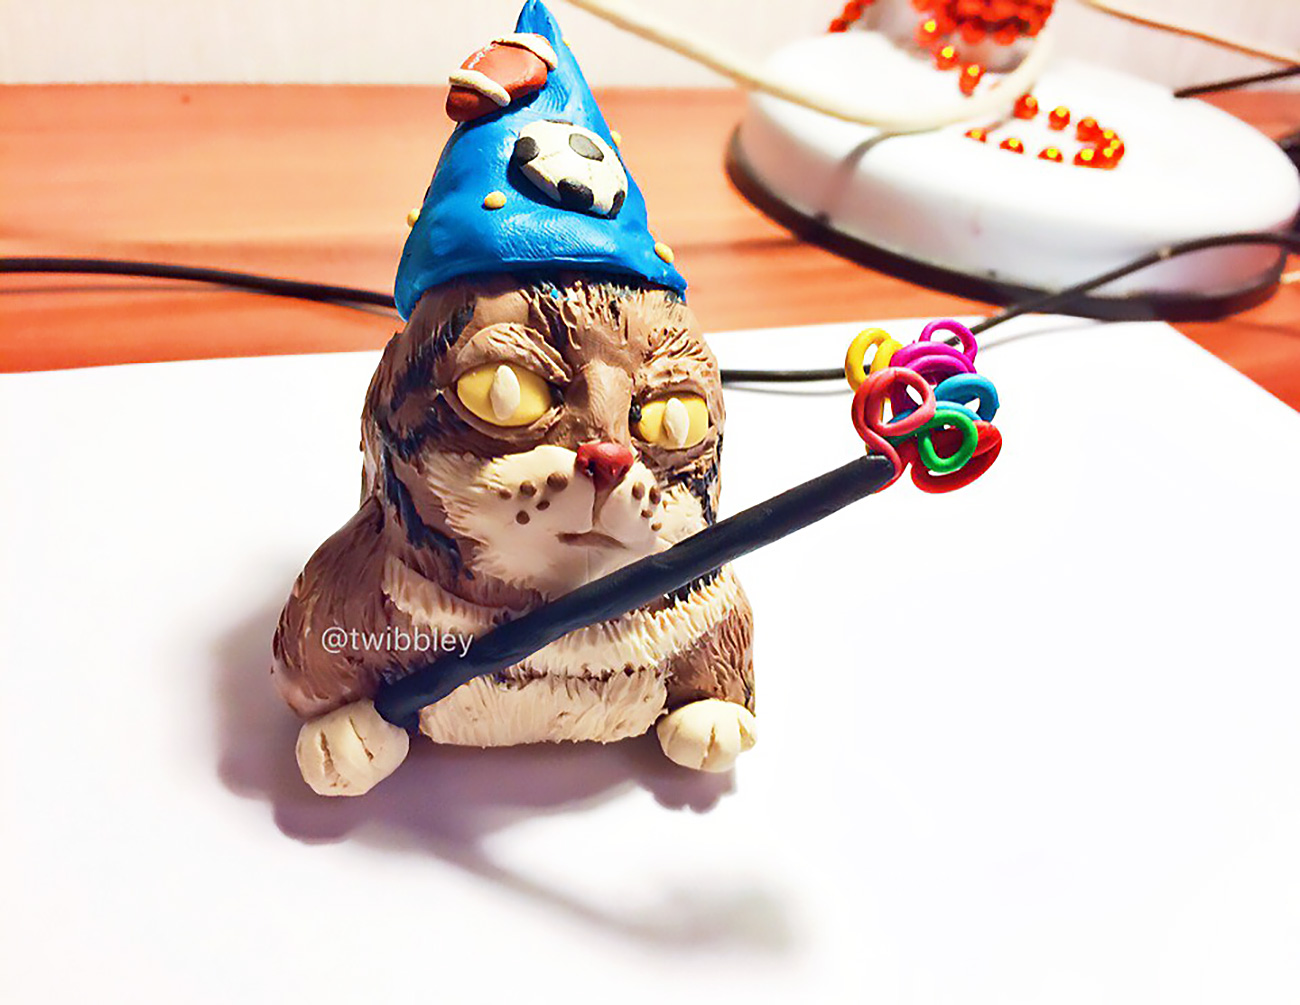 Meme del gato mago conocido como Vzhuj. Fuente: <a  data-cke-saved-href="https://twitter.com/twibbley?lang=en" href="https://twitter.com/twibbley?lang=en" target="_blank">@twibbley</a>